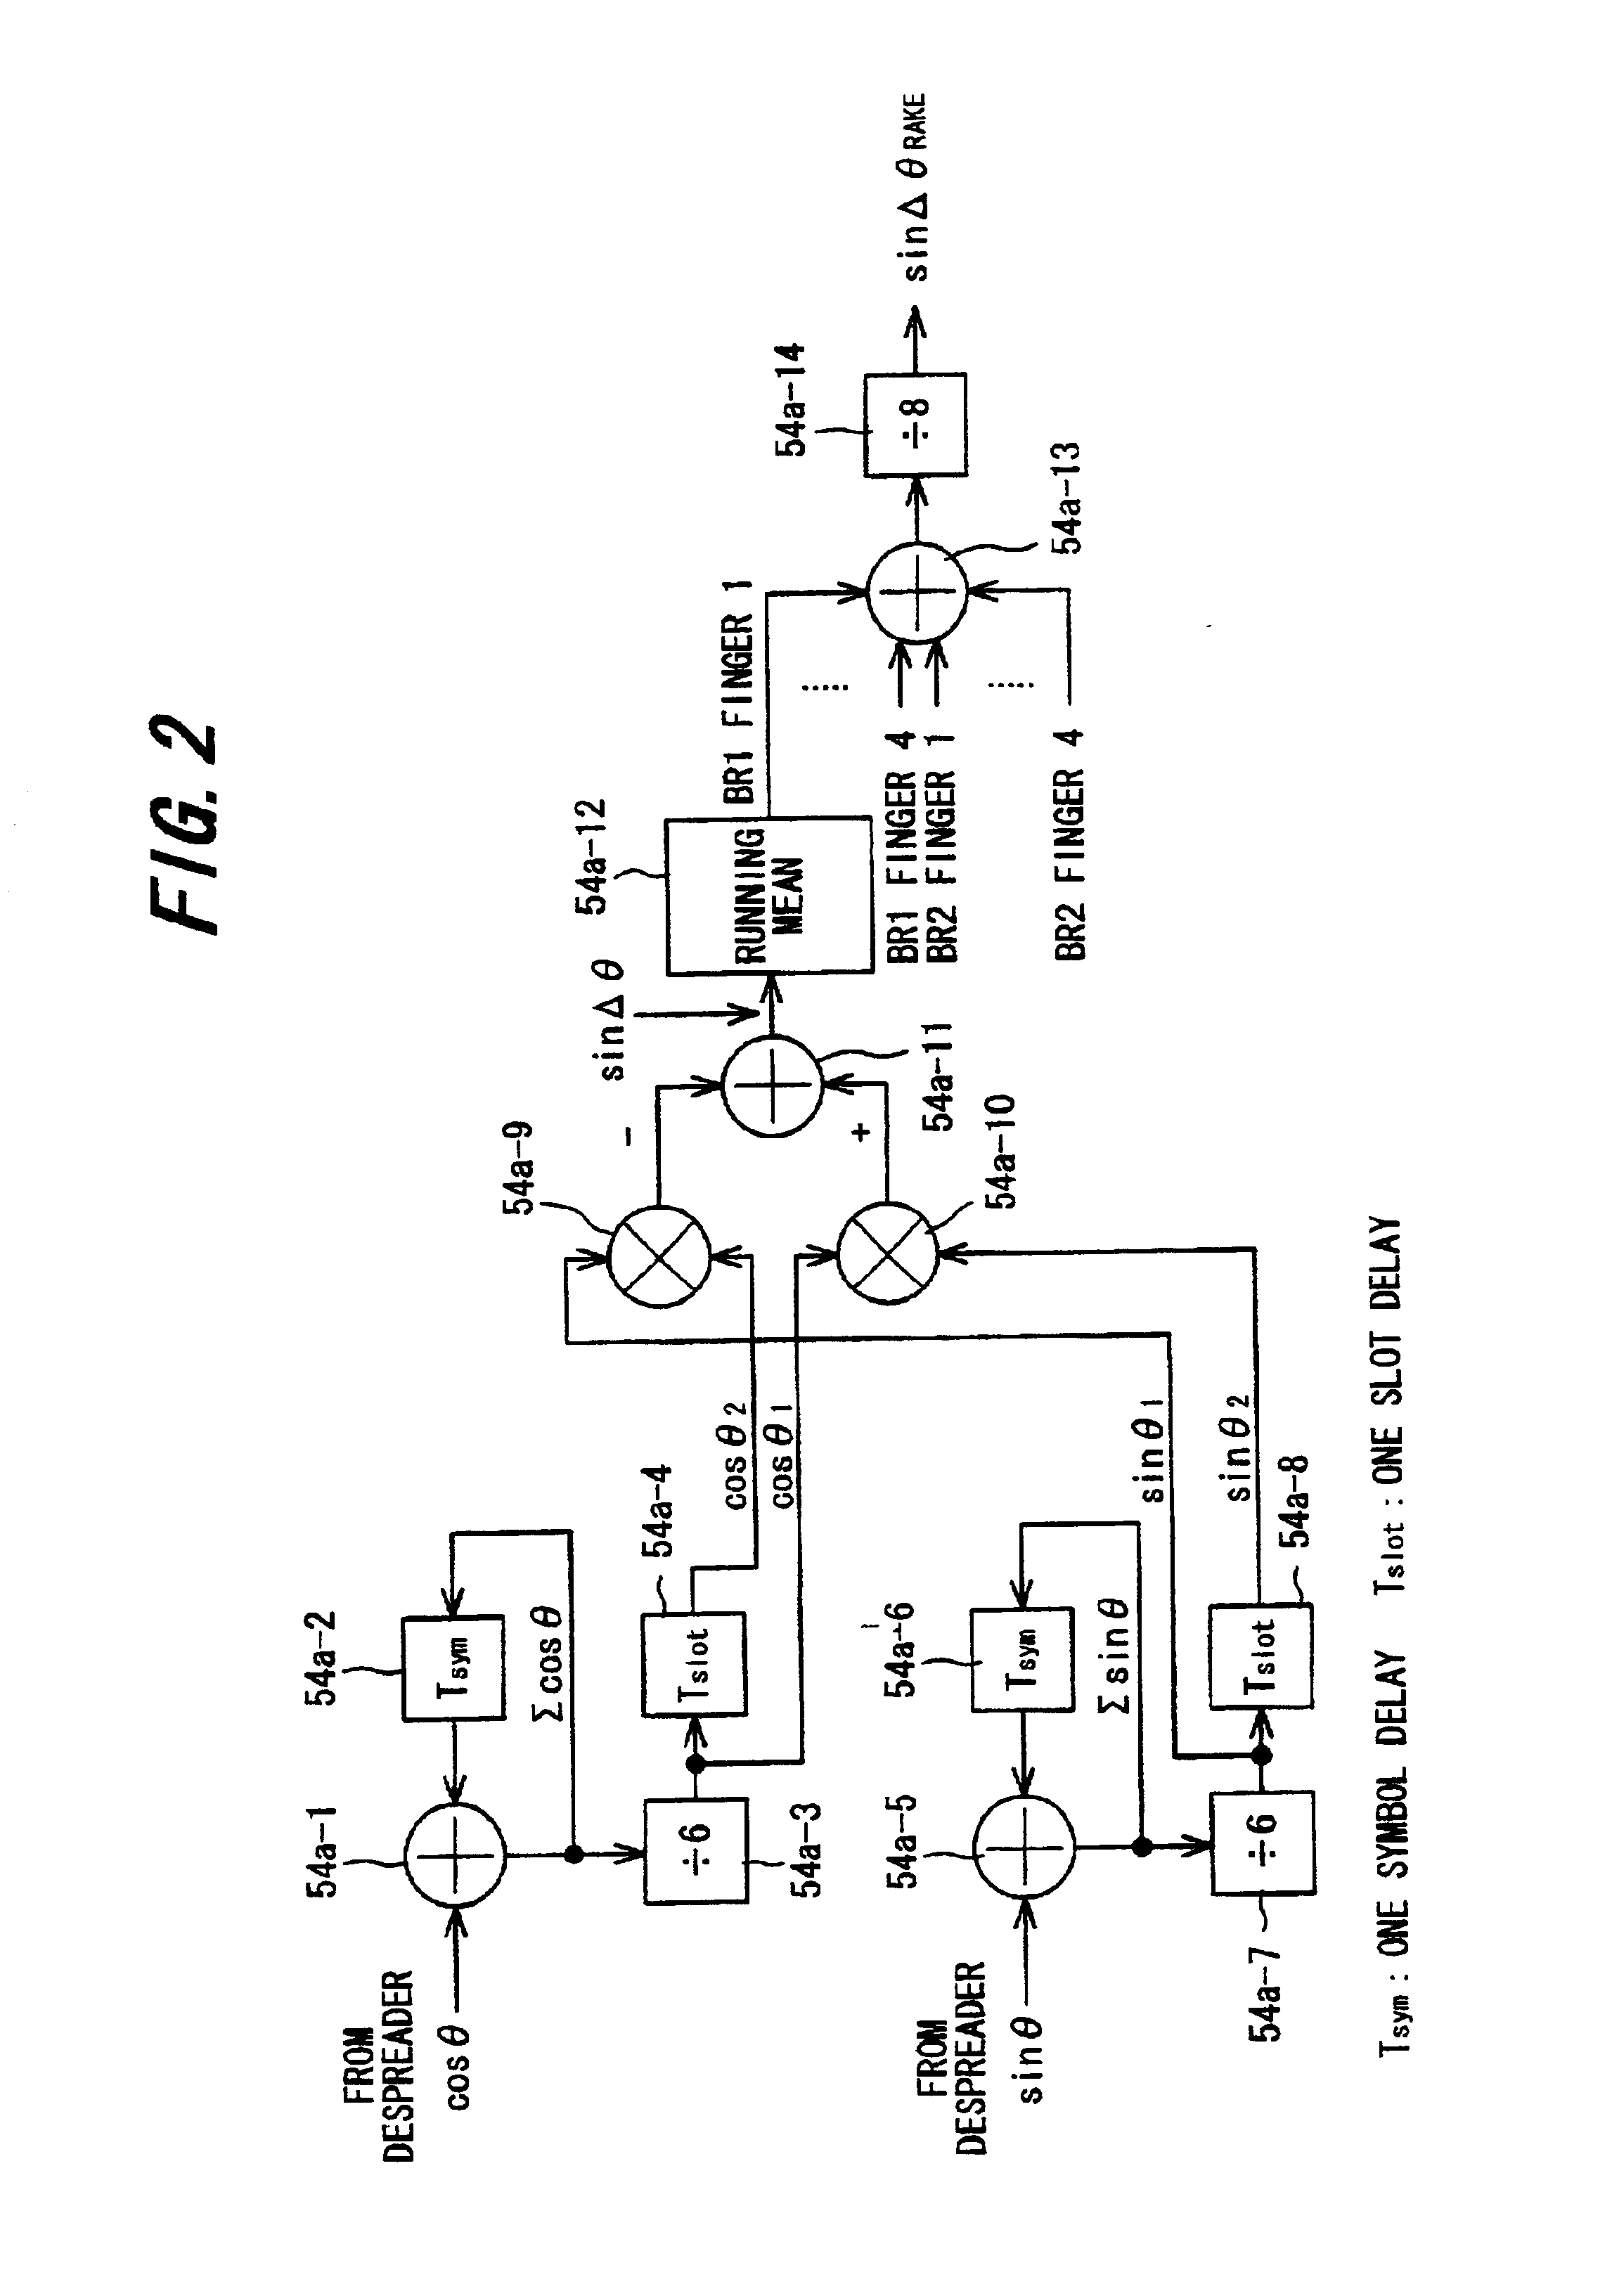 Transmission power control apparatus